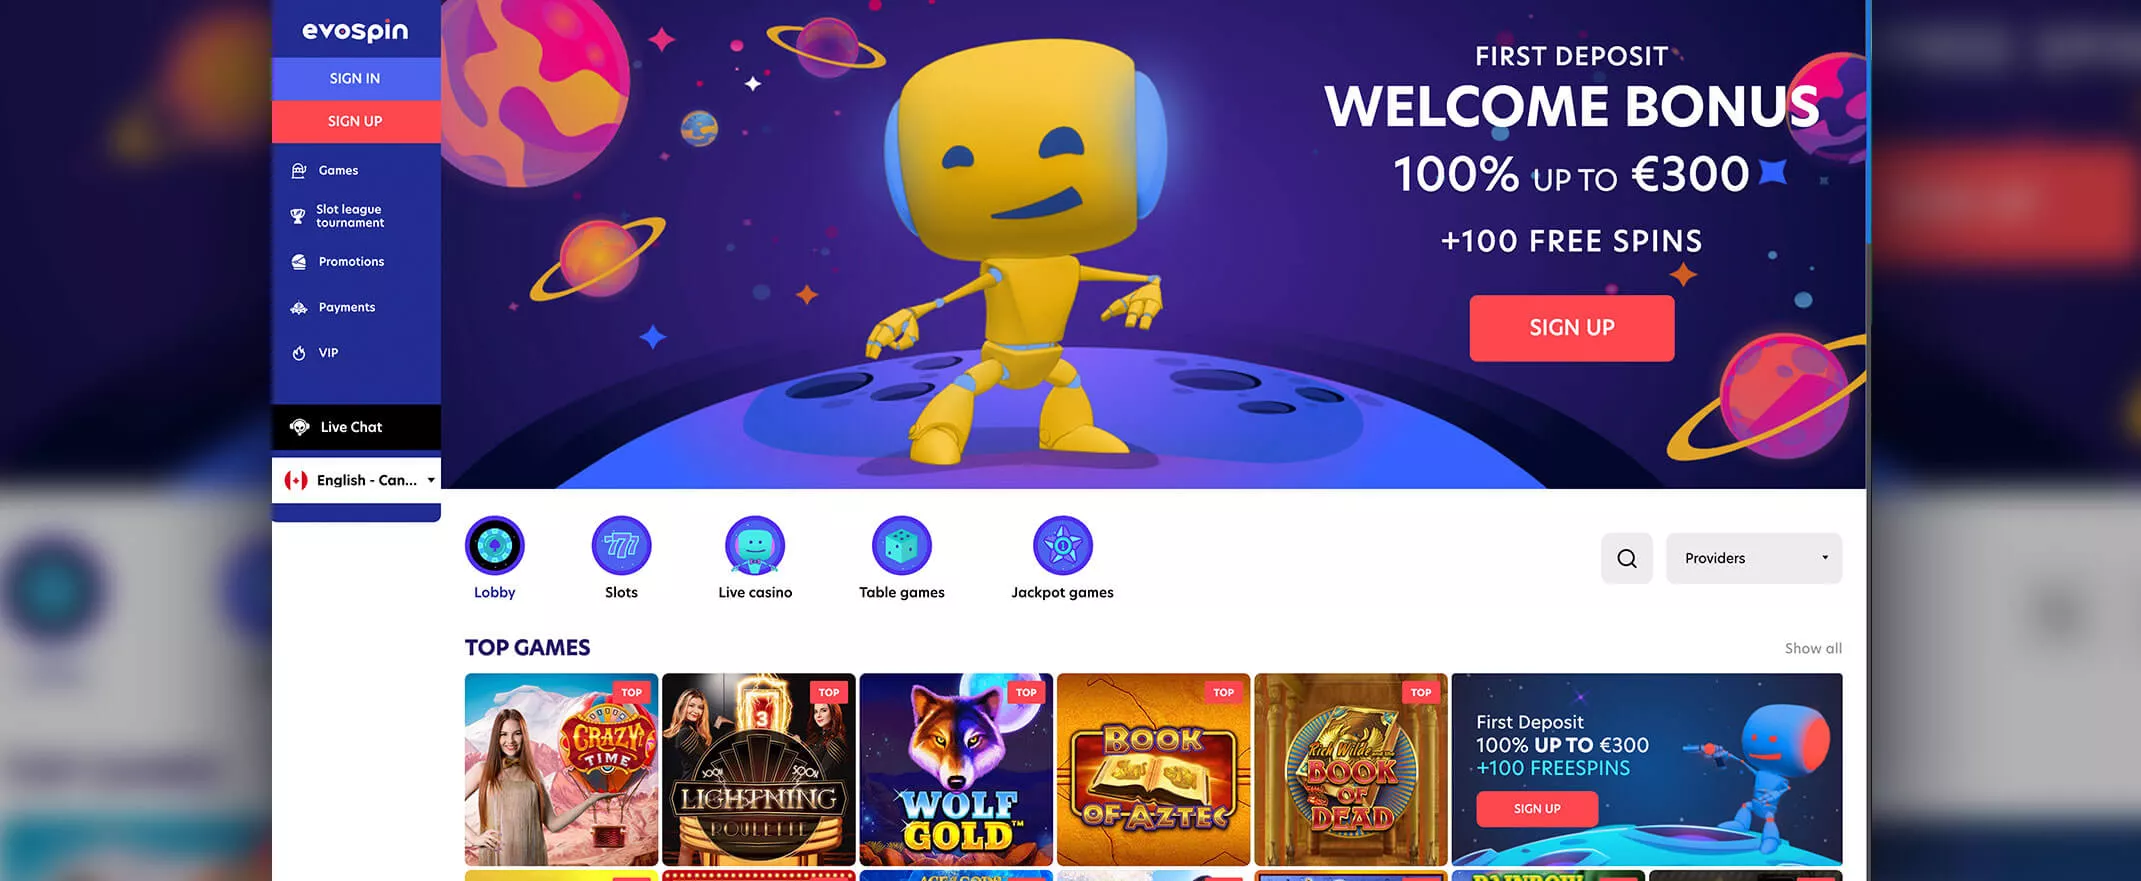 Evospin casino screenshot of the homepage